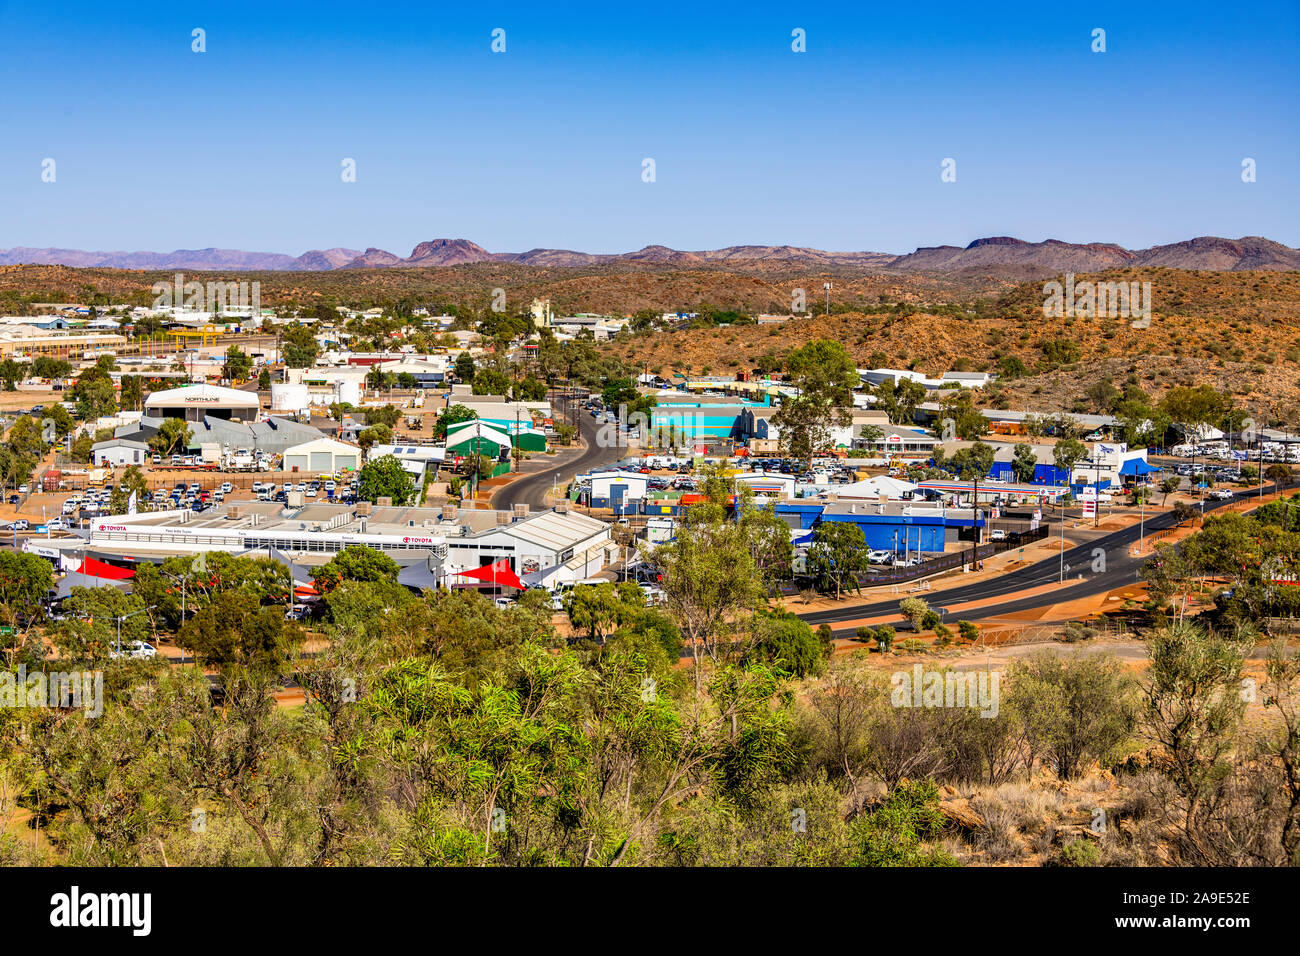 8 Okt 19 - Alice Springs, Northern Territory, Australien. Der Blick auf Alice Springs vom ANZAC Hill. Stockfoto